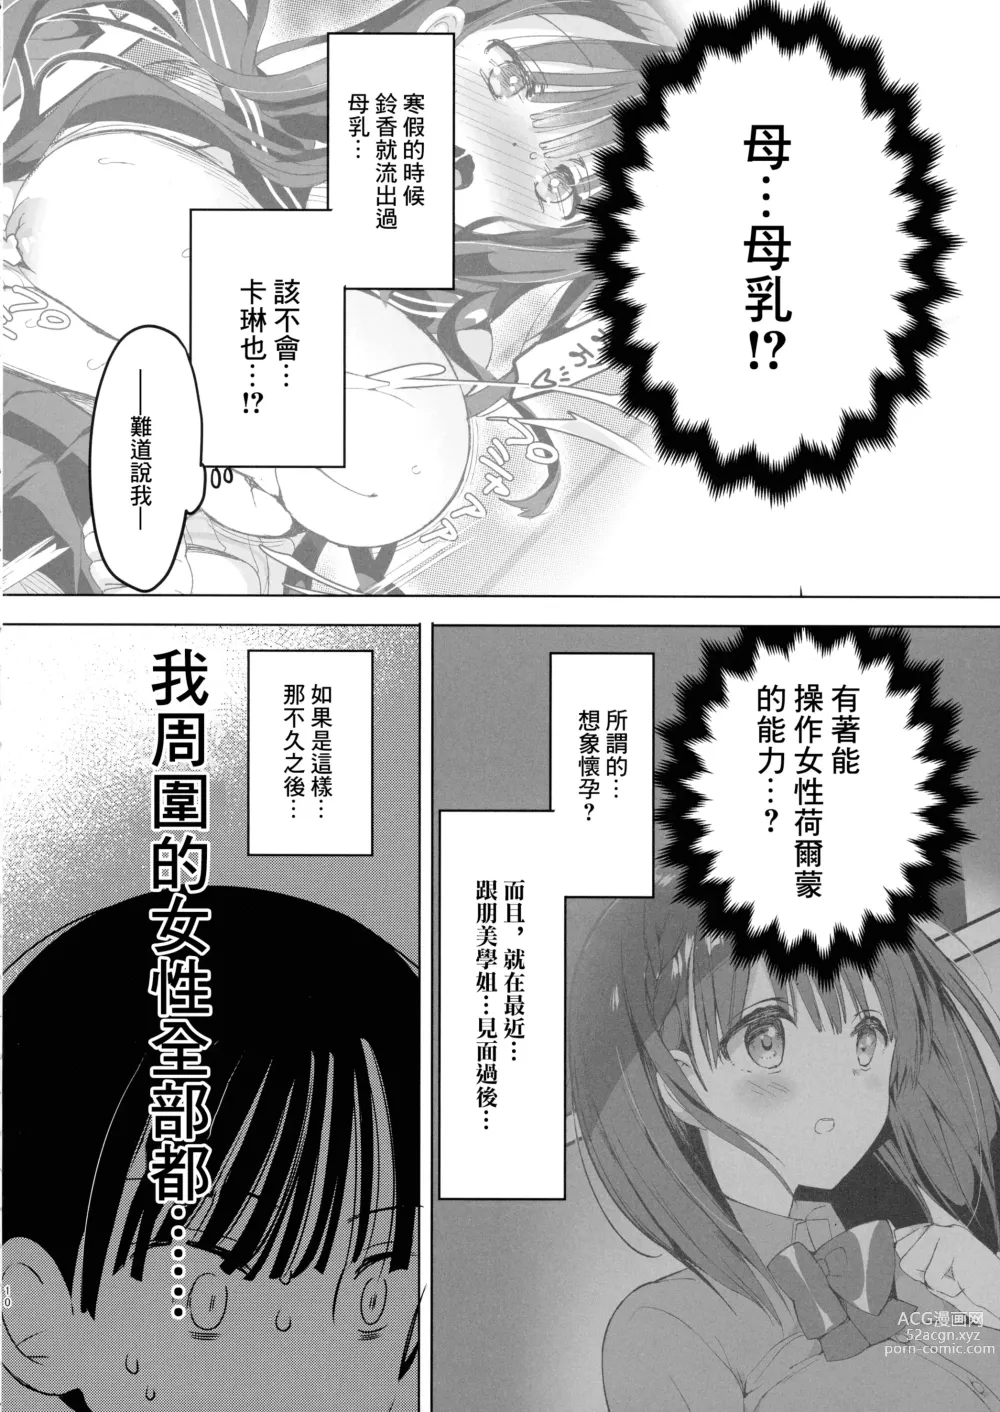 Page 10 of doujinshi Gal Chichi-chan wa Nomasetai.